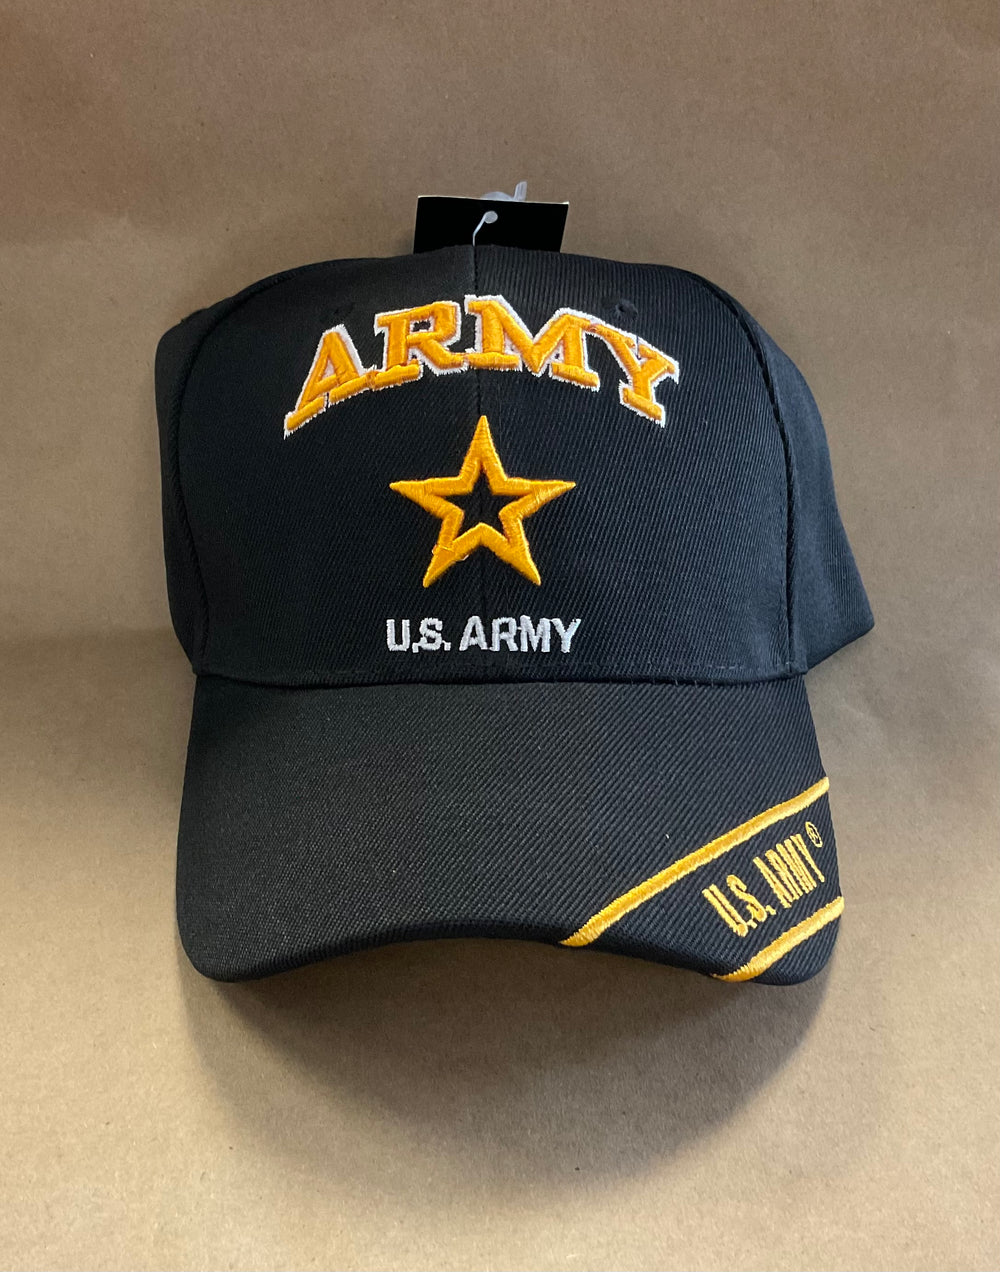 Ball Cap w/Army Star